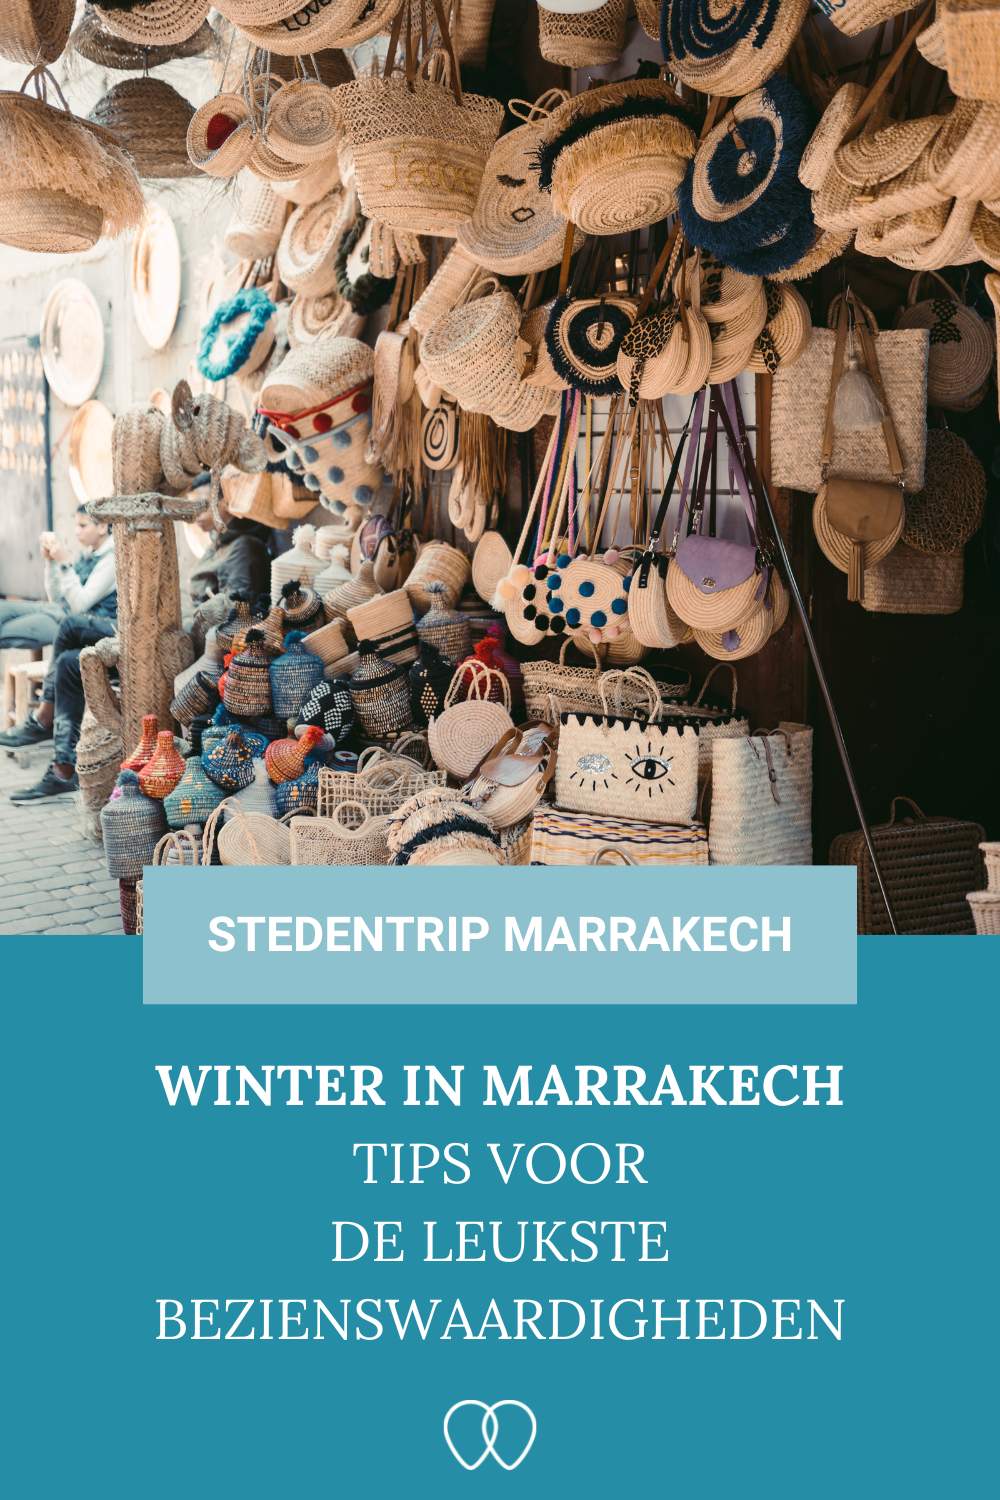 Winter in Marrakech, maak een stedentrip Marrakech in de winter. Bekijk de tips | Mooistestedentrips.nl